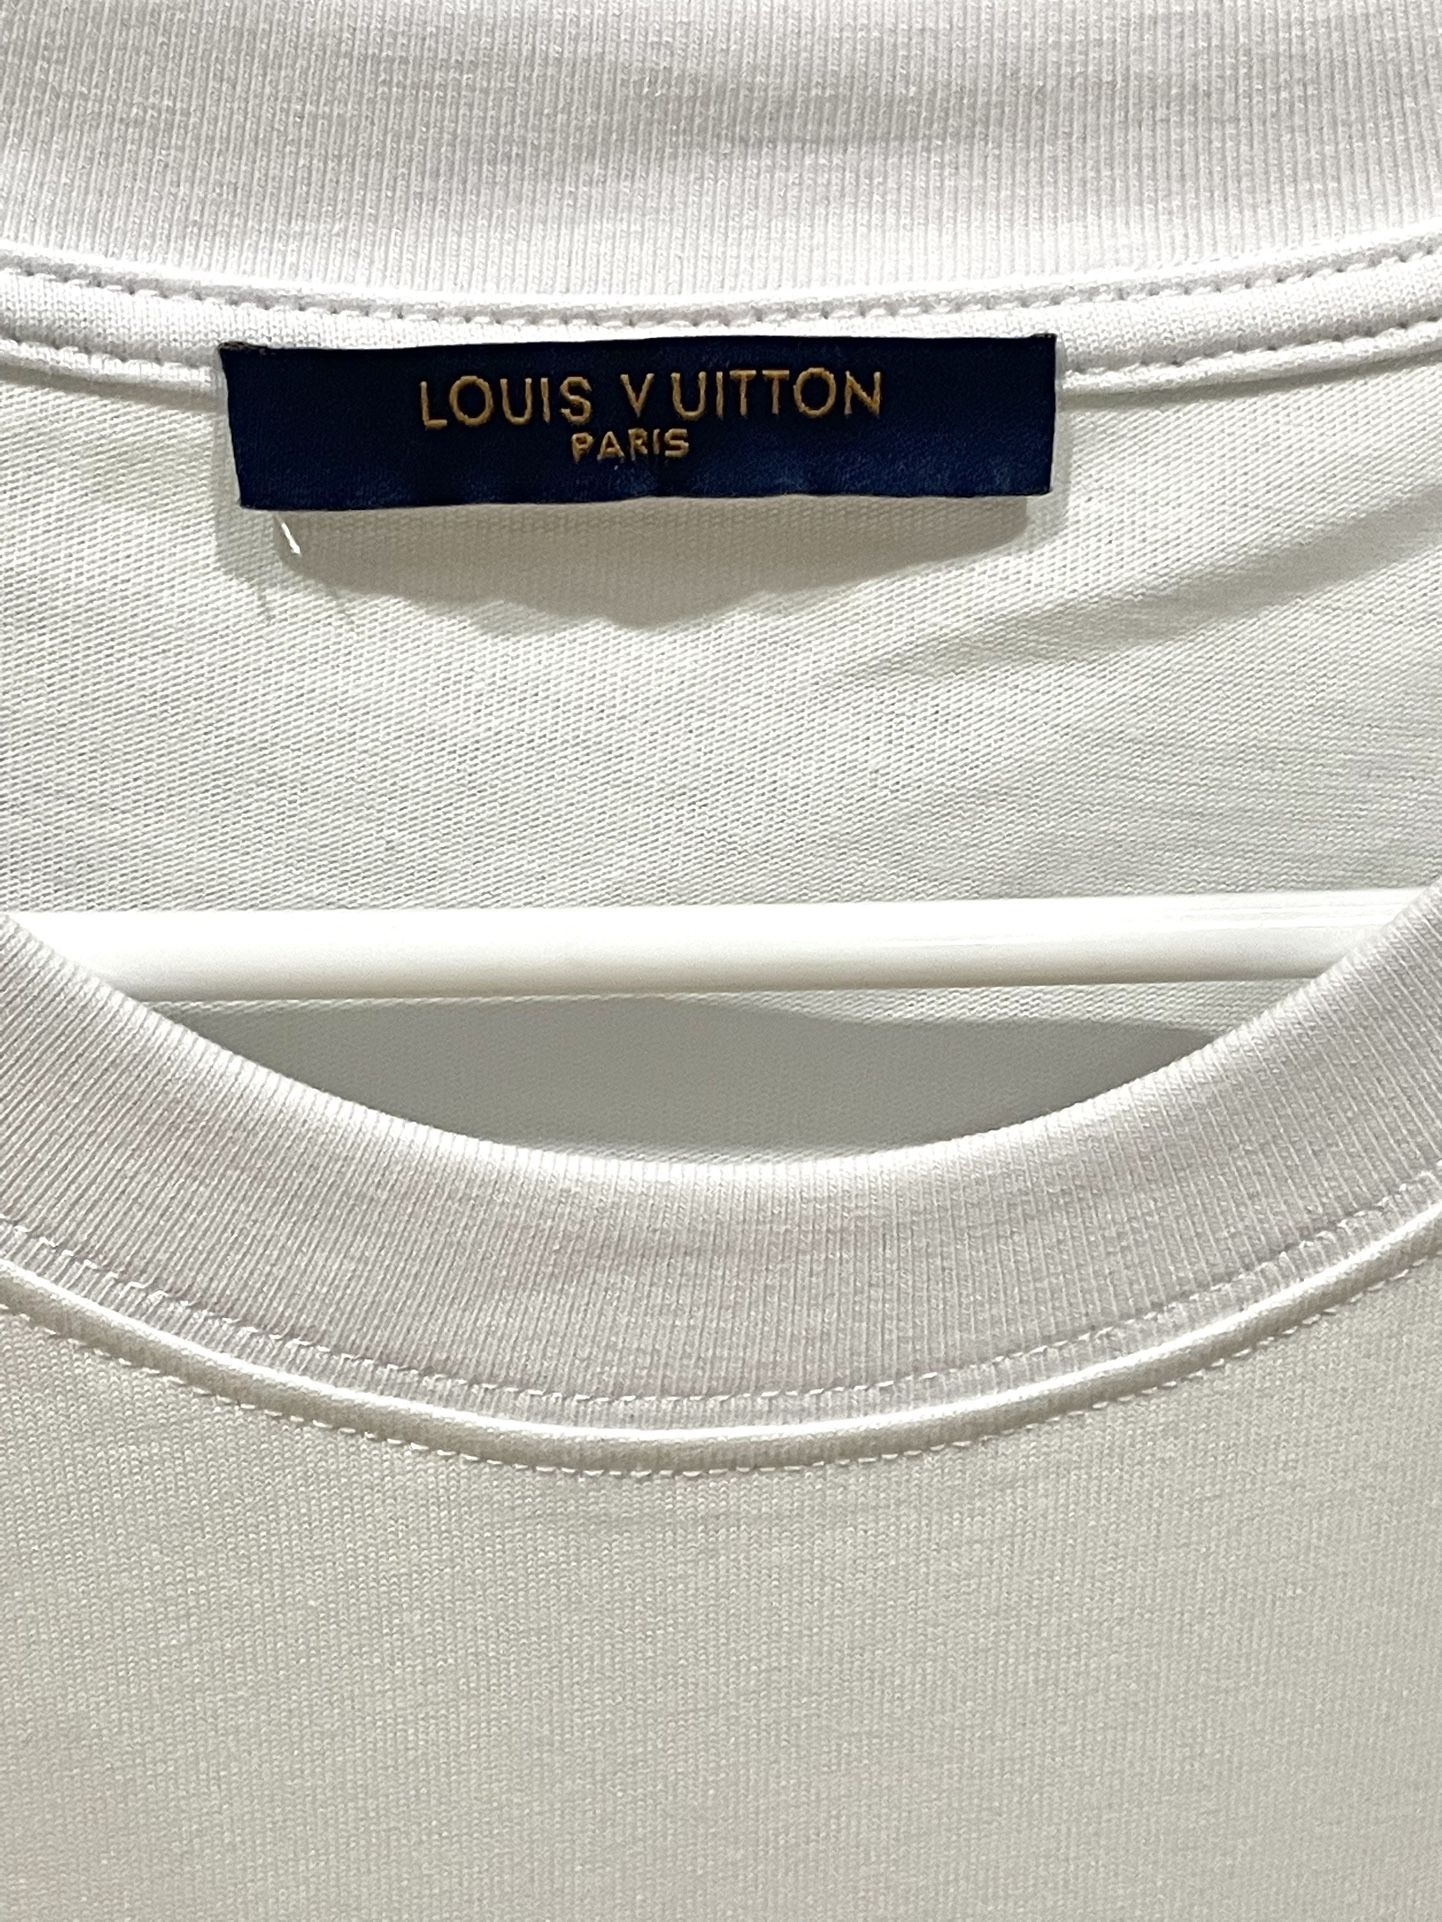 Louis Vuitton XL T-Shirt for Sale in Norfolk, VA - OfferUp